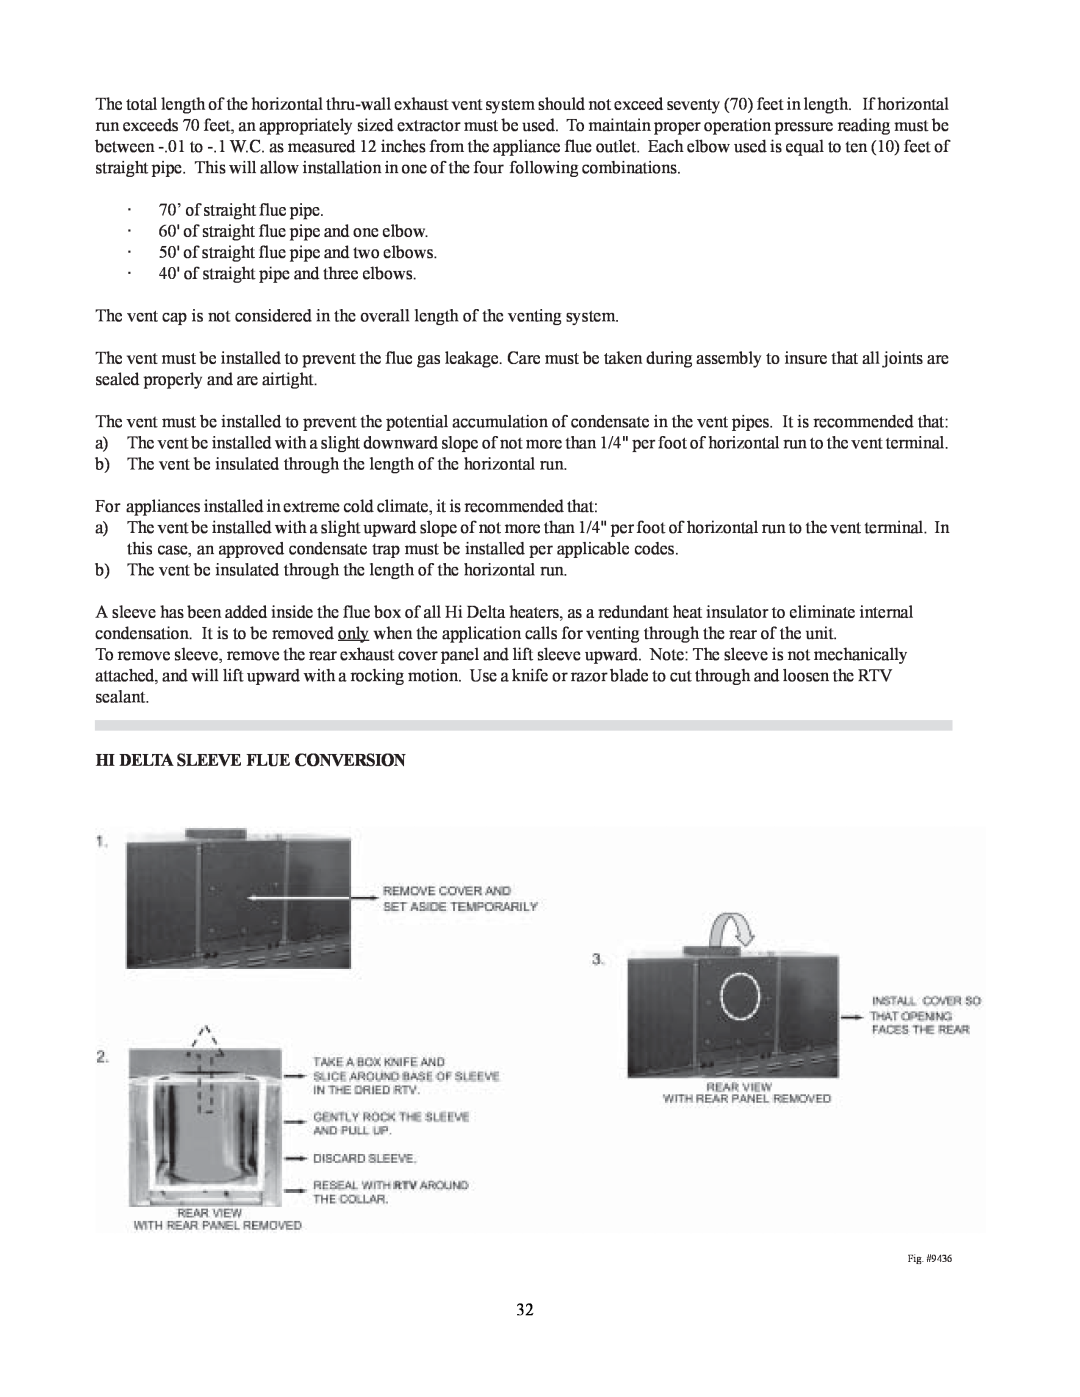 Raypak 302-902 manual Hi Delta Sleeve Flue Conversion 